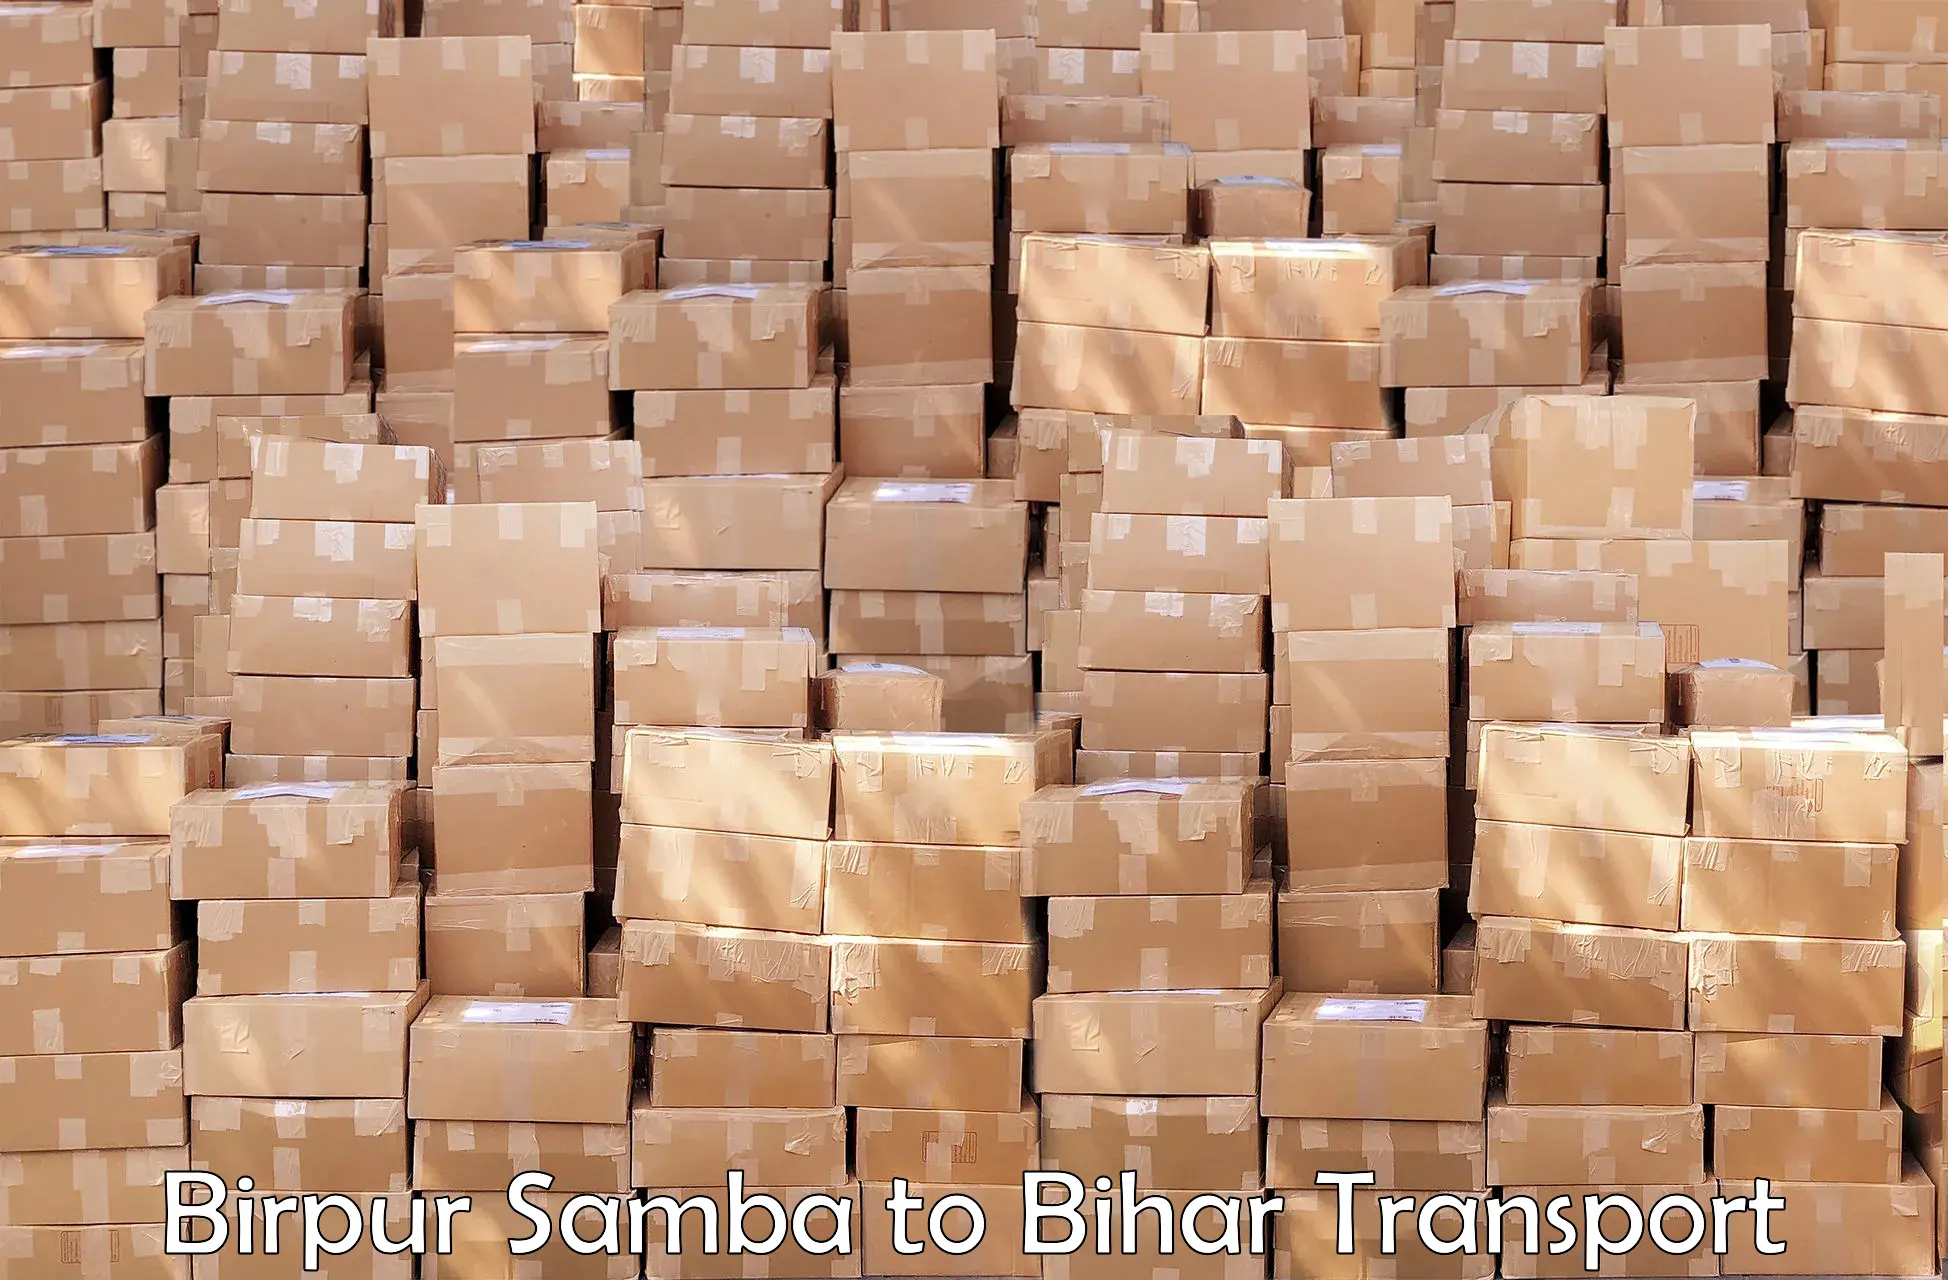 Shipping partner Birpur Samba to Rohtas